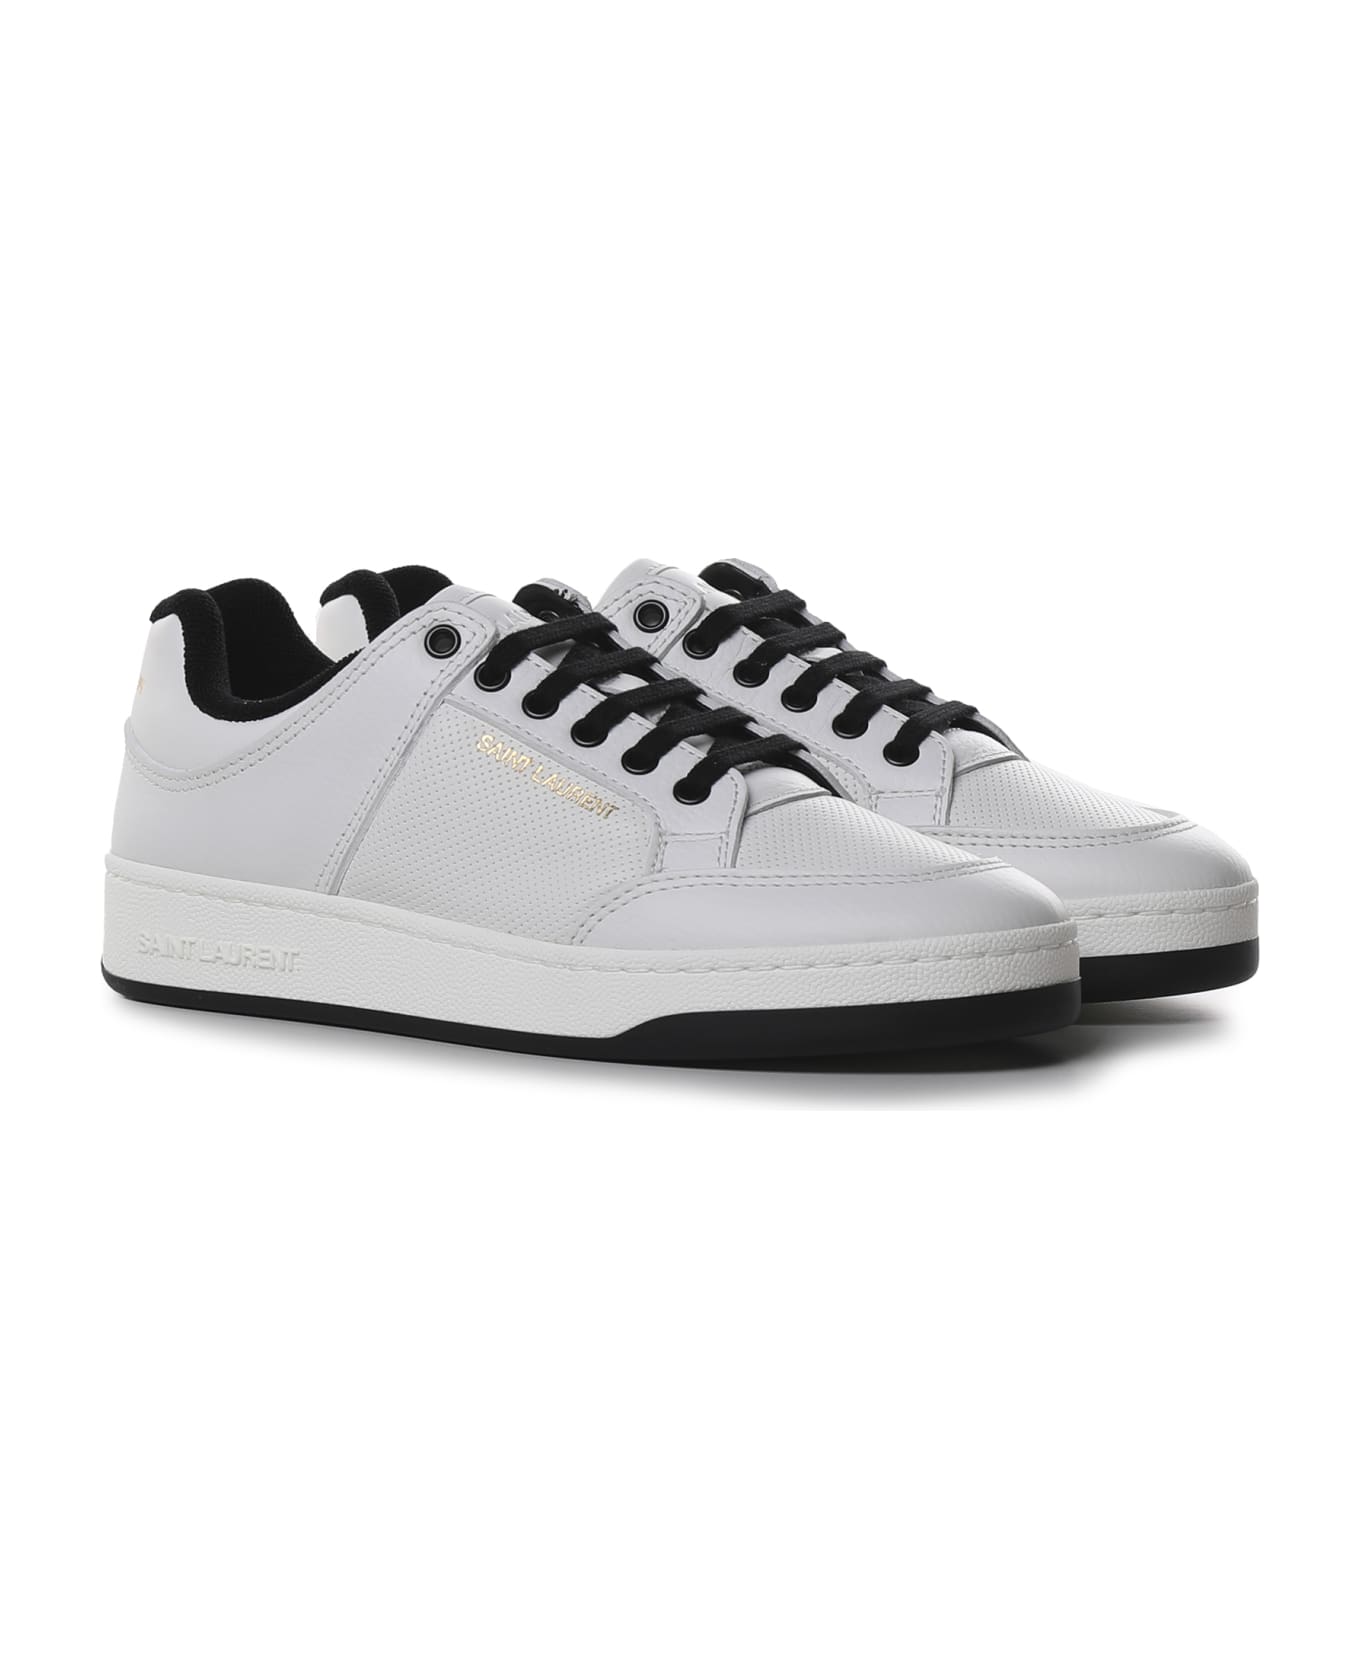 Saint Laurent Low Sneakers - White